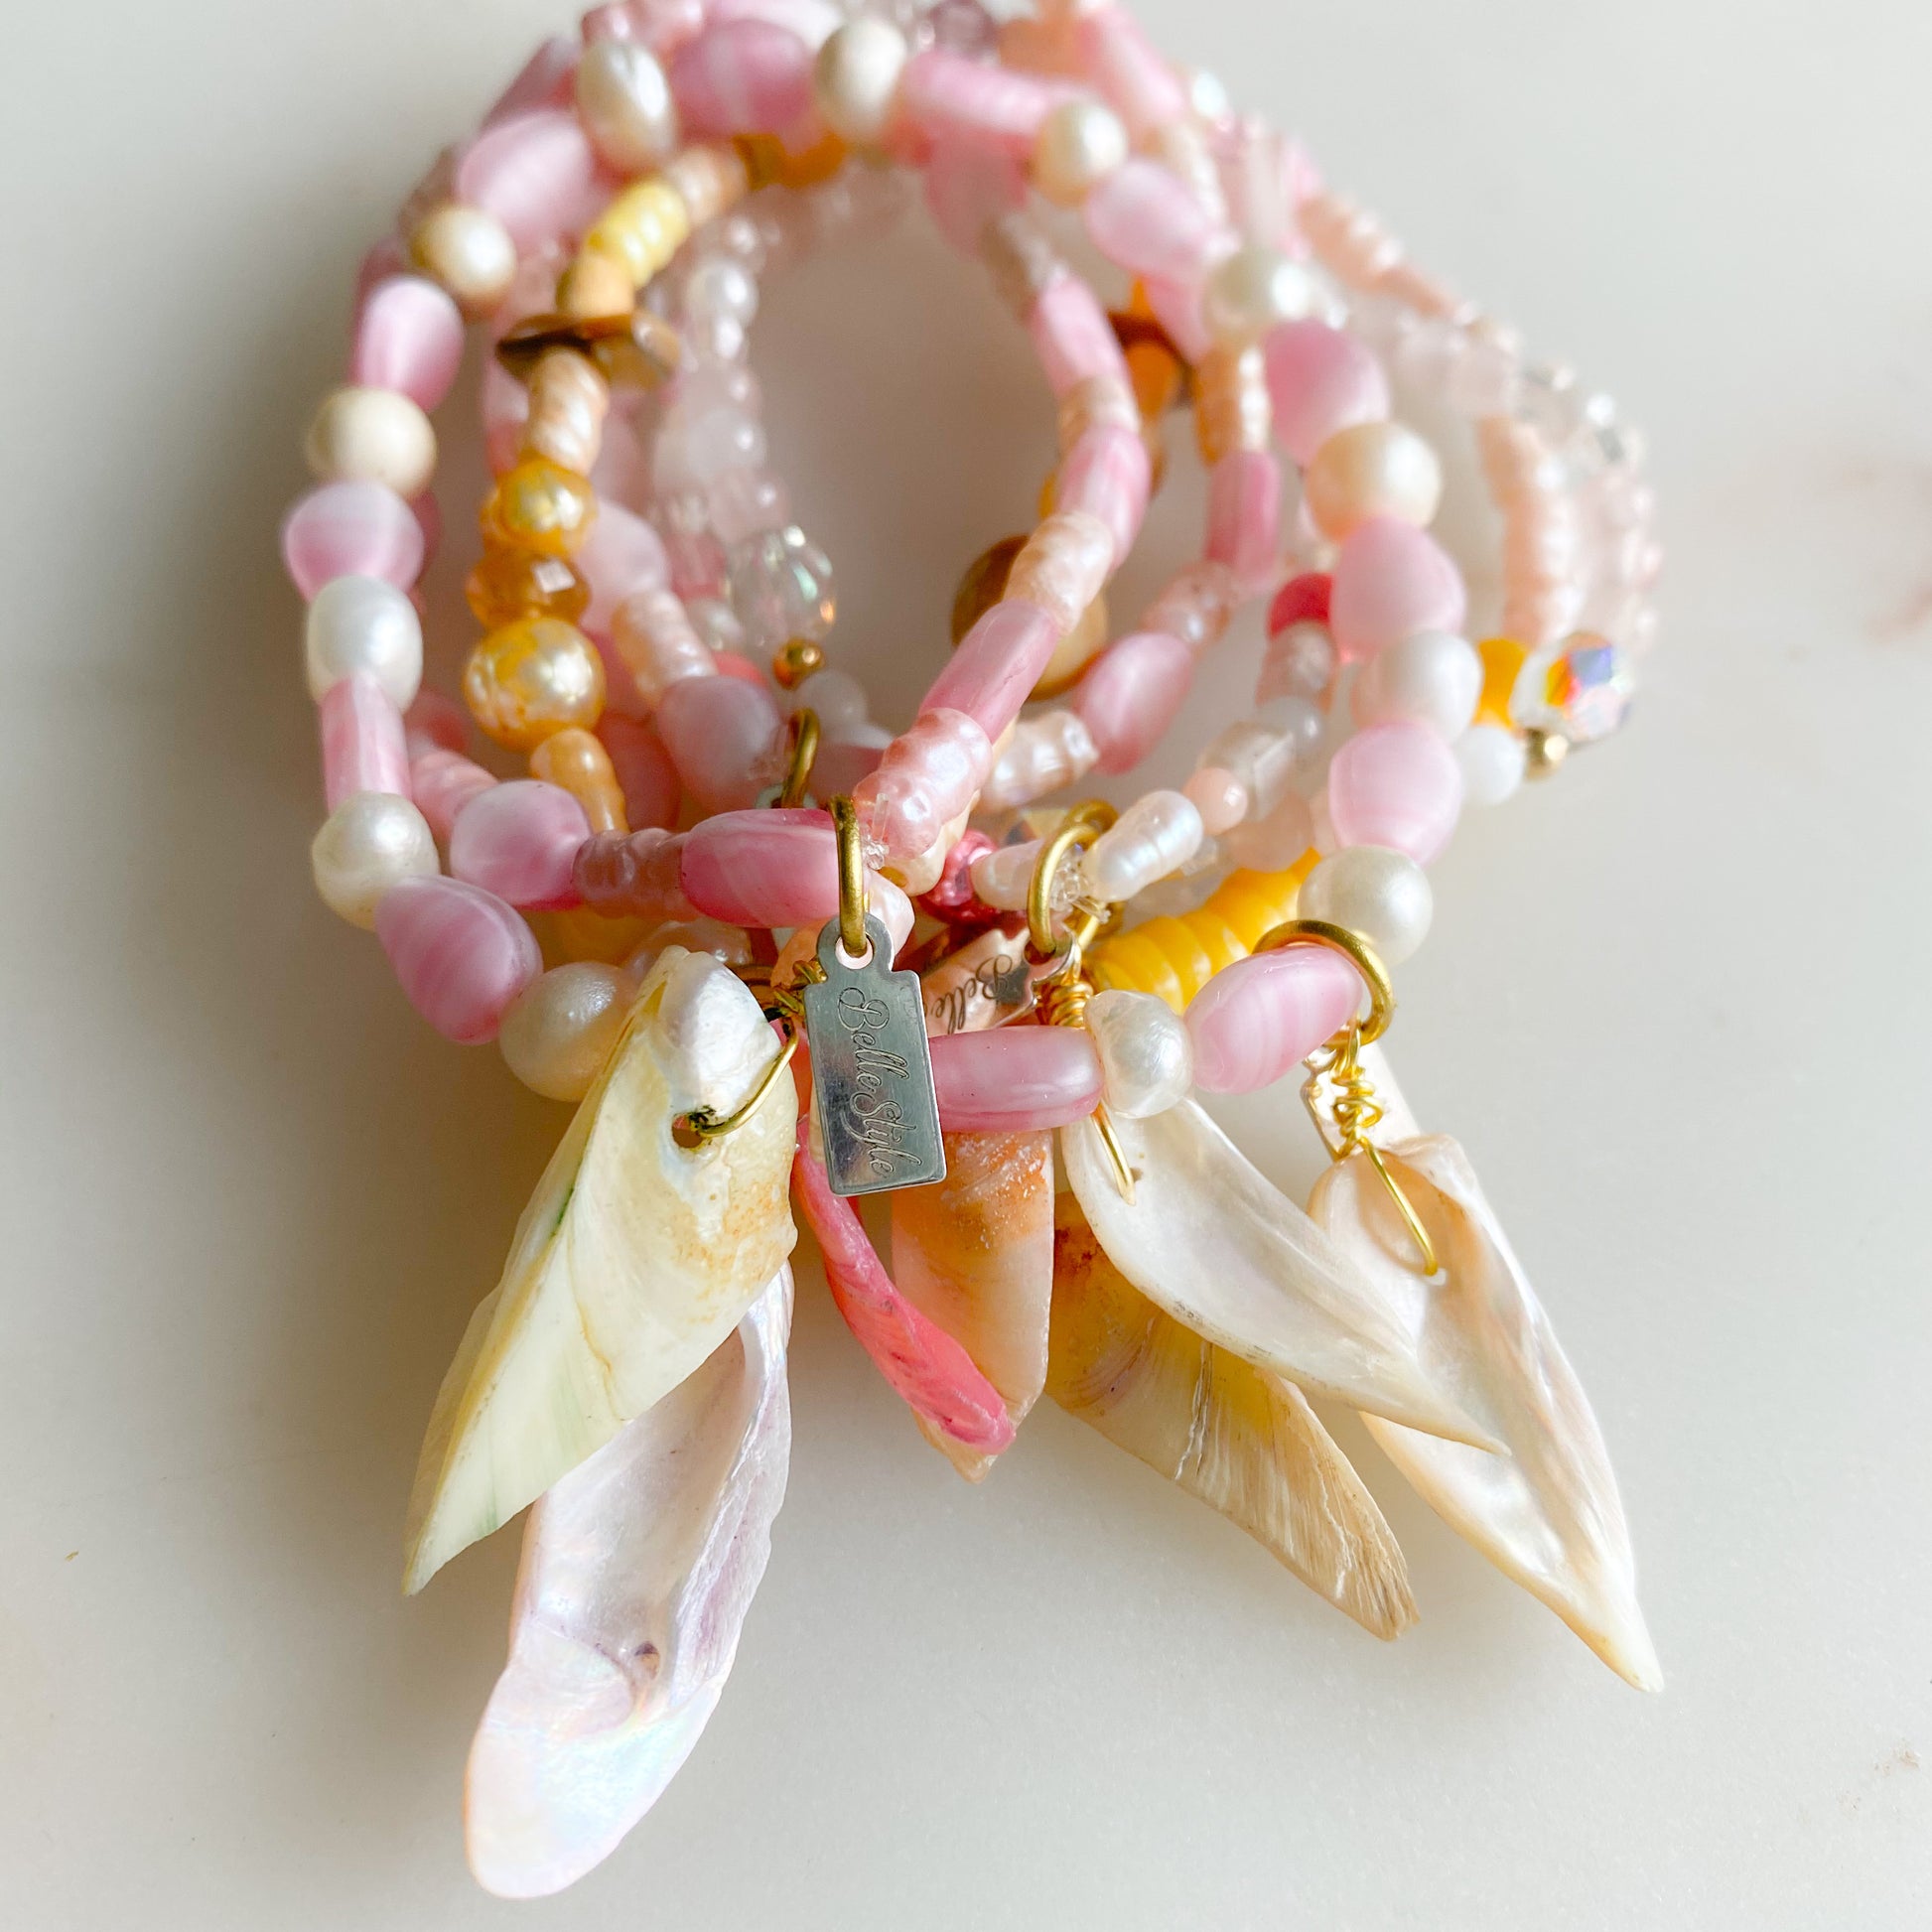 Morgan Sustainable Shell Bracelet - BelleStyle - crystal quartz rose quartz freshwater pearl handmade pink girls vintage mother of pearl shells